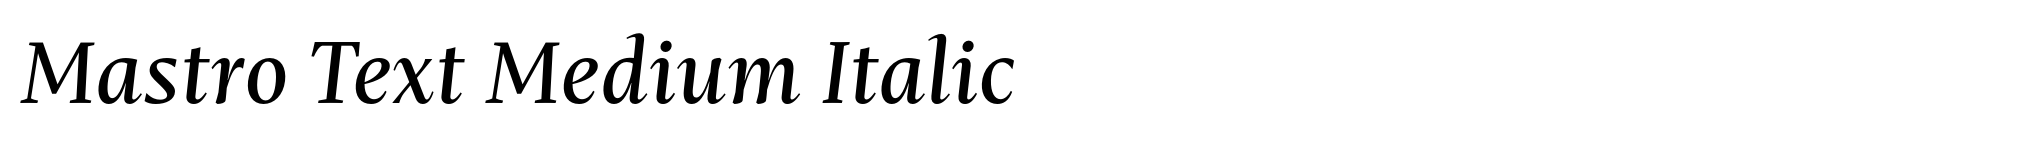 Mastro Text Medium Italic image